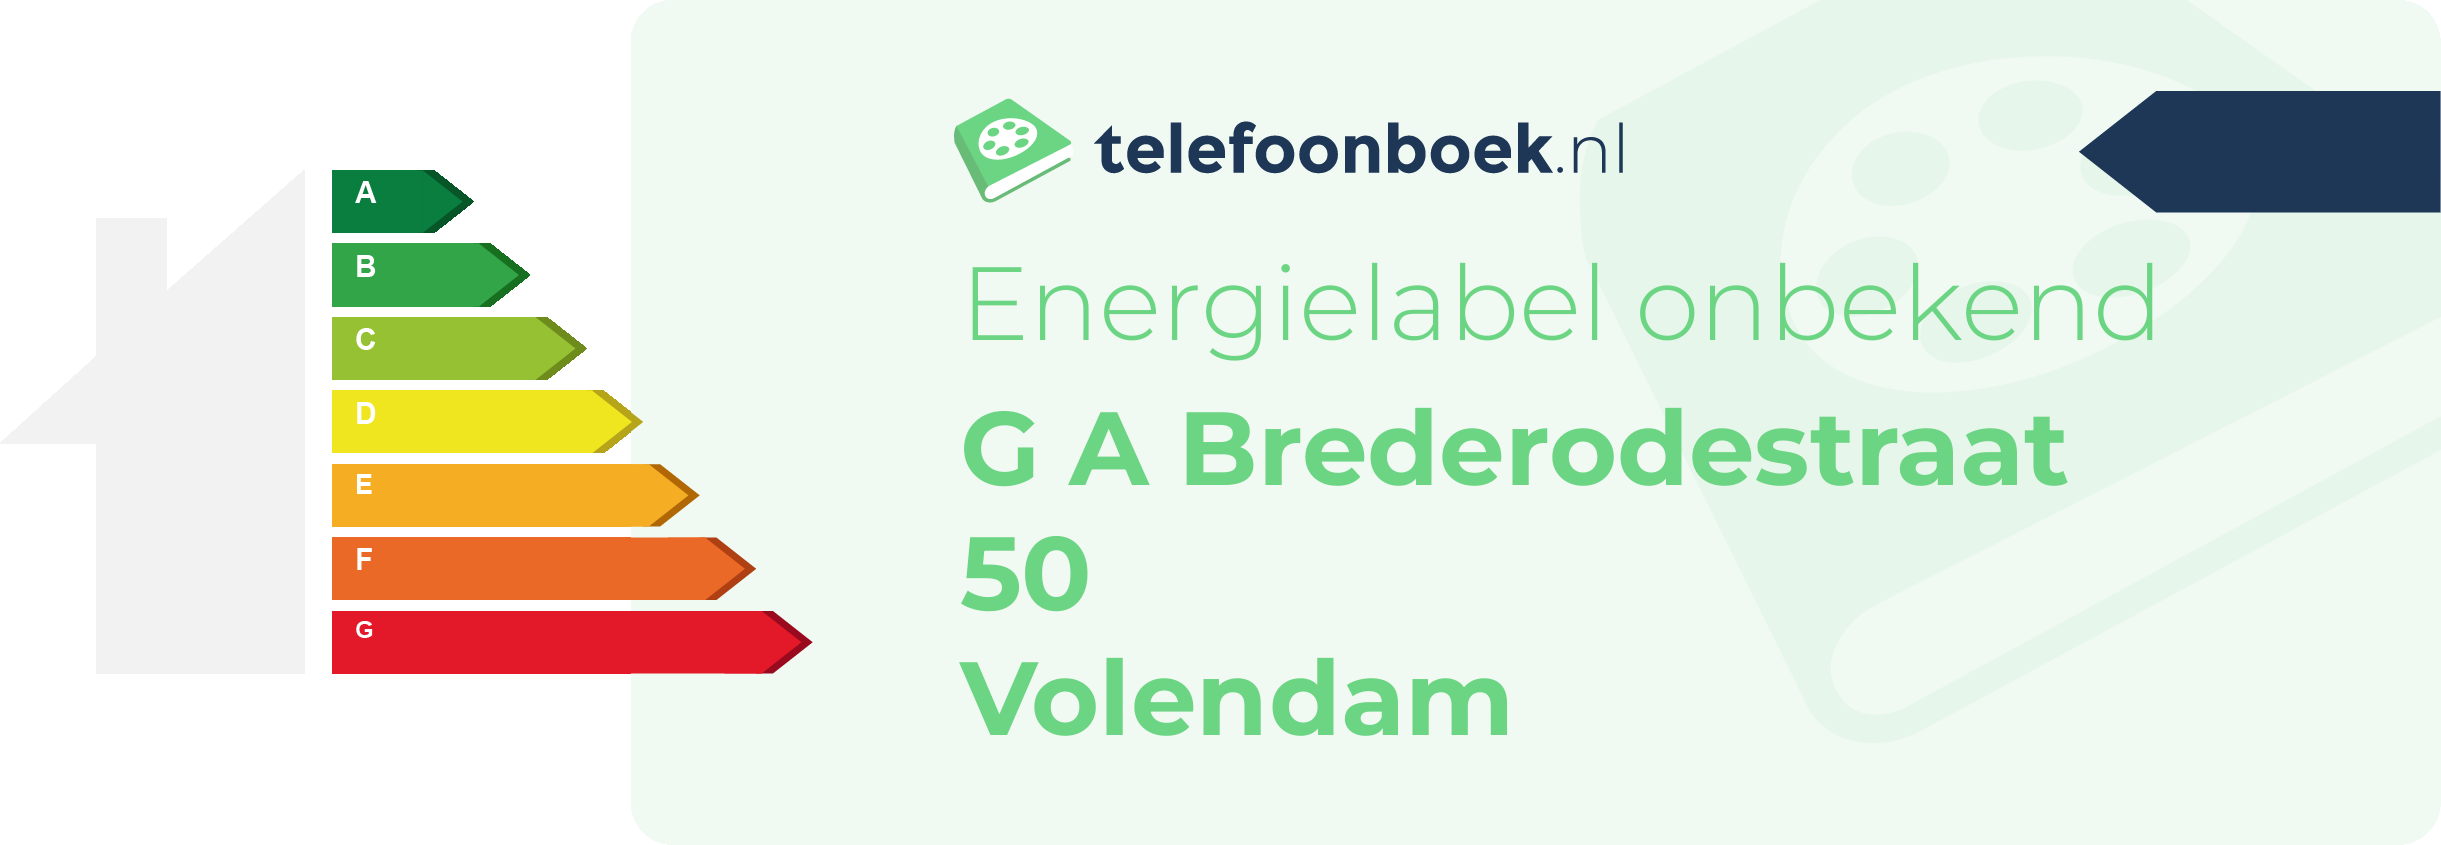 Energielabel G A Brederodestraat 50 Volendam